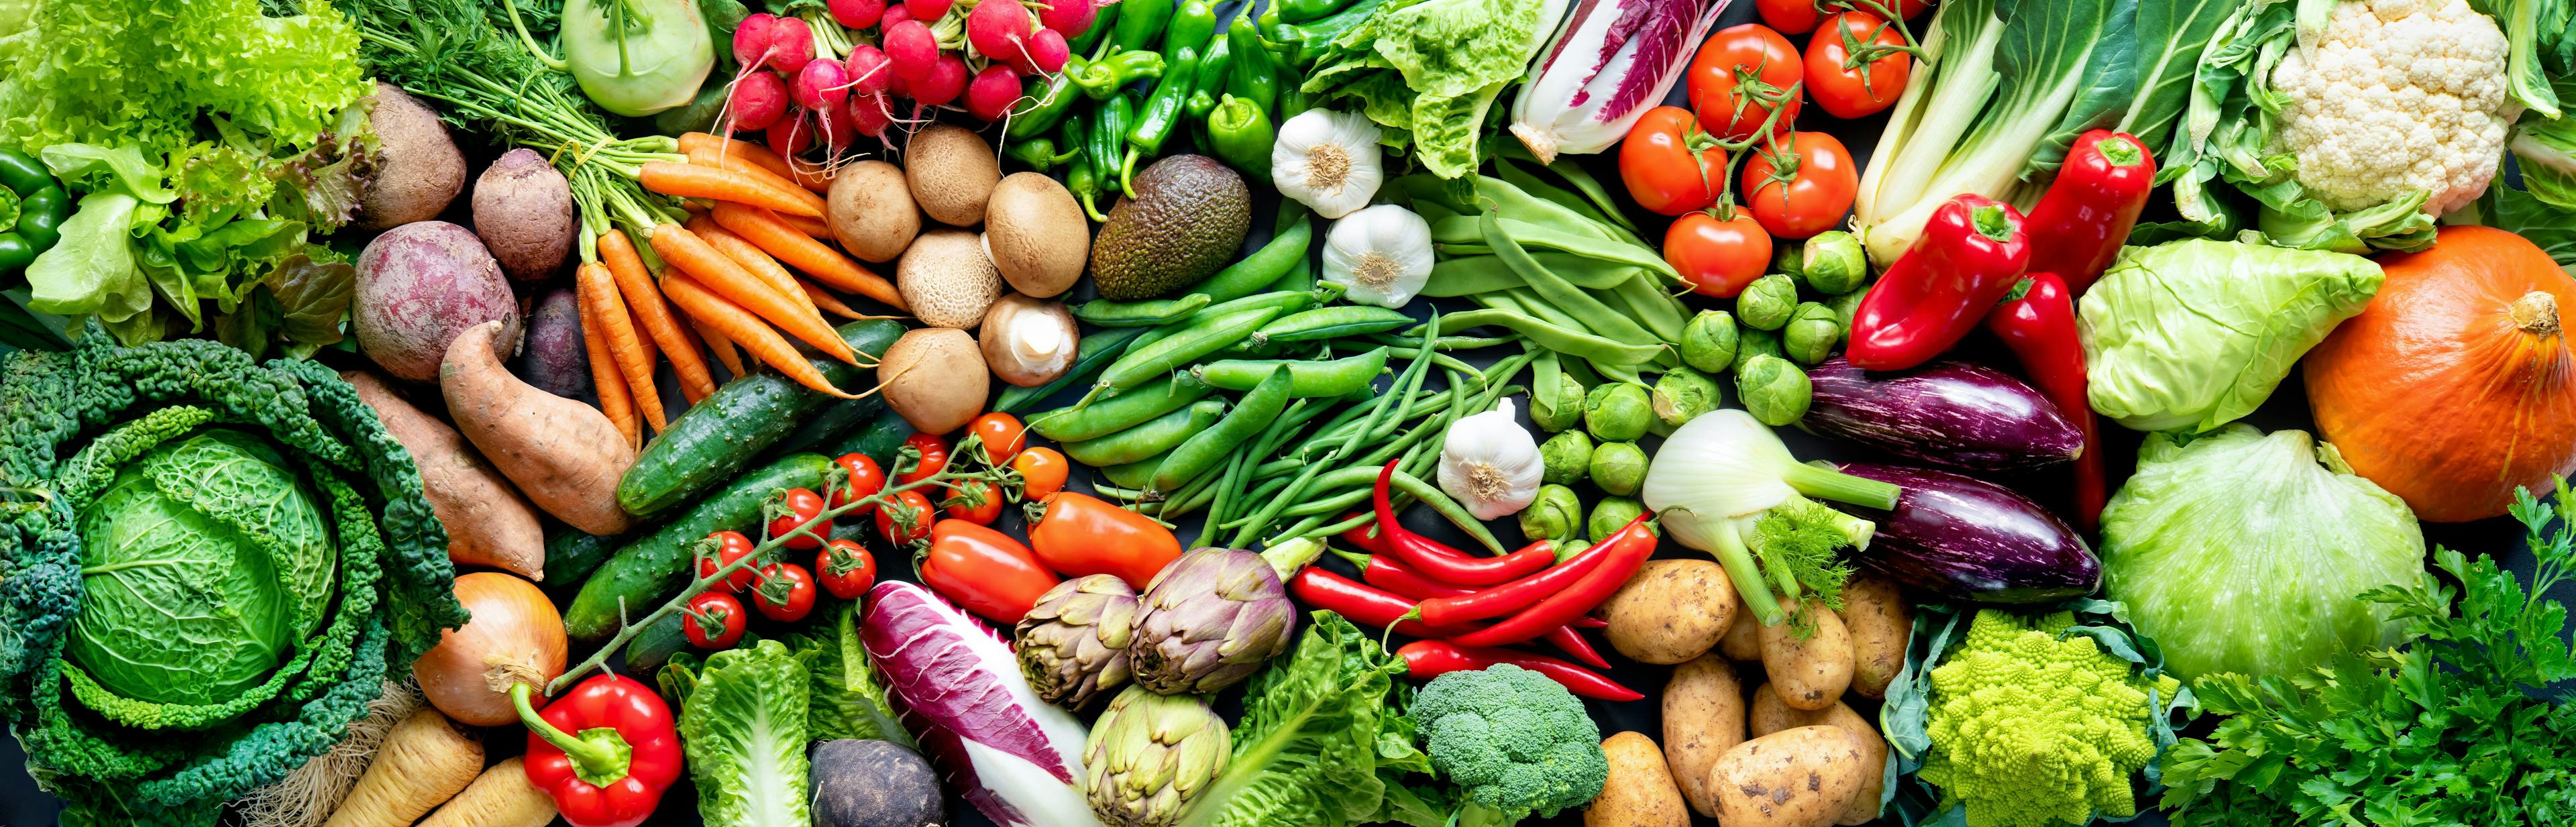 Food background with assortment of fresh organic vegetables | Image Credit: © Alexander Raths - stock.adobe.com